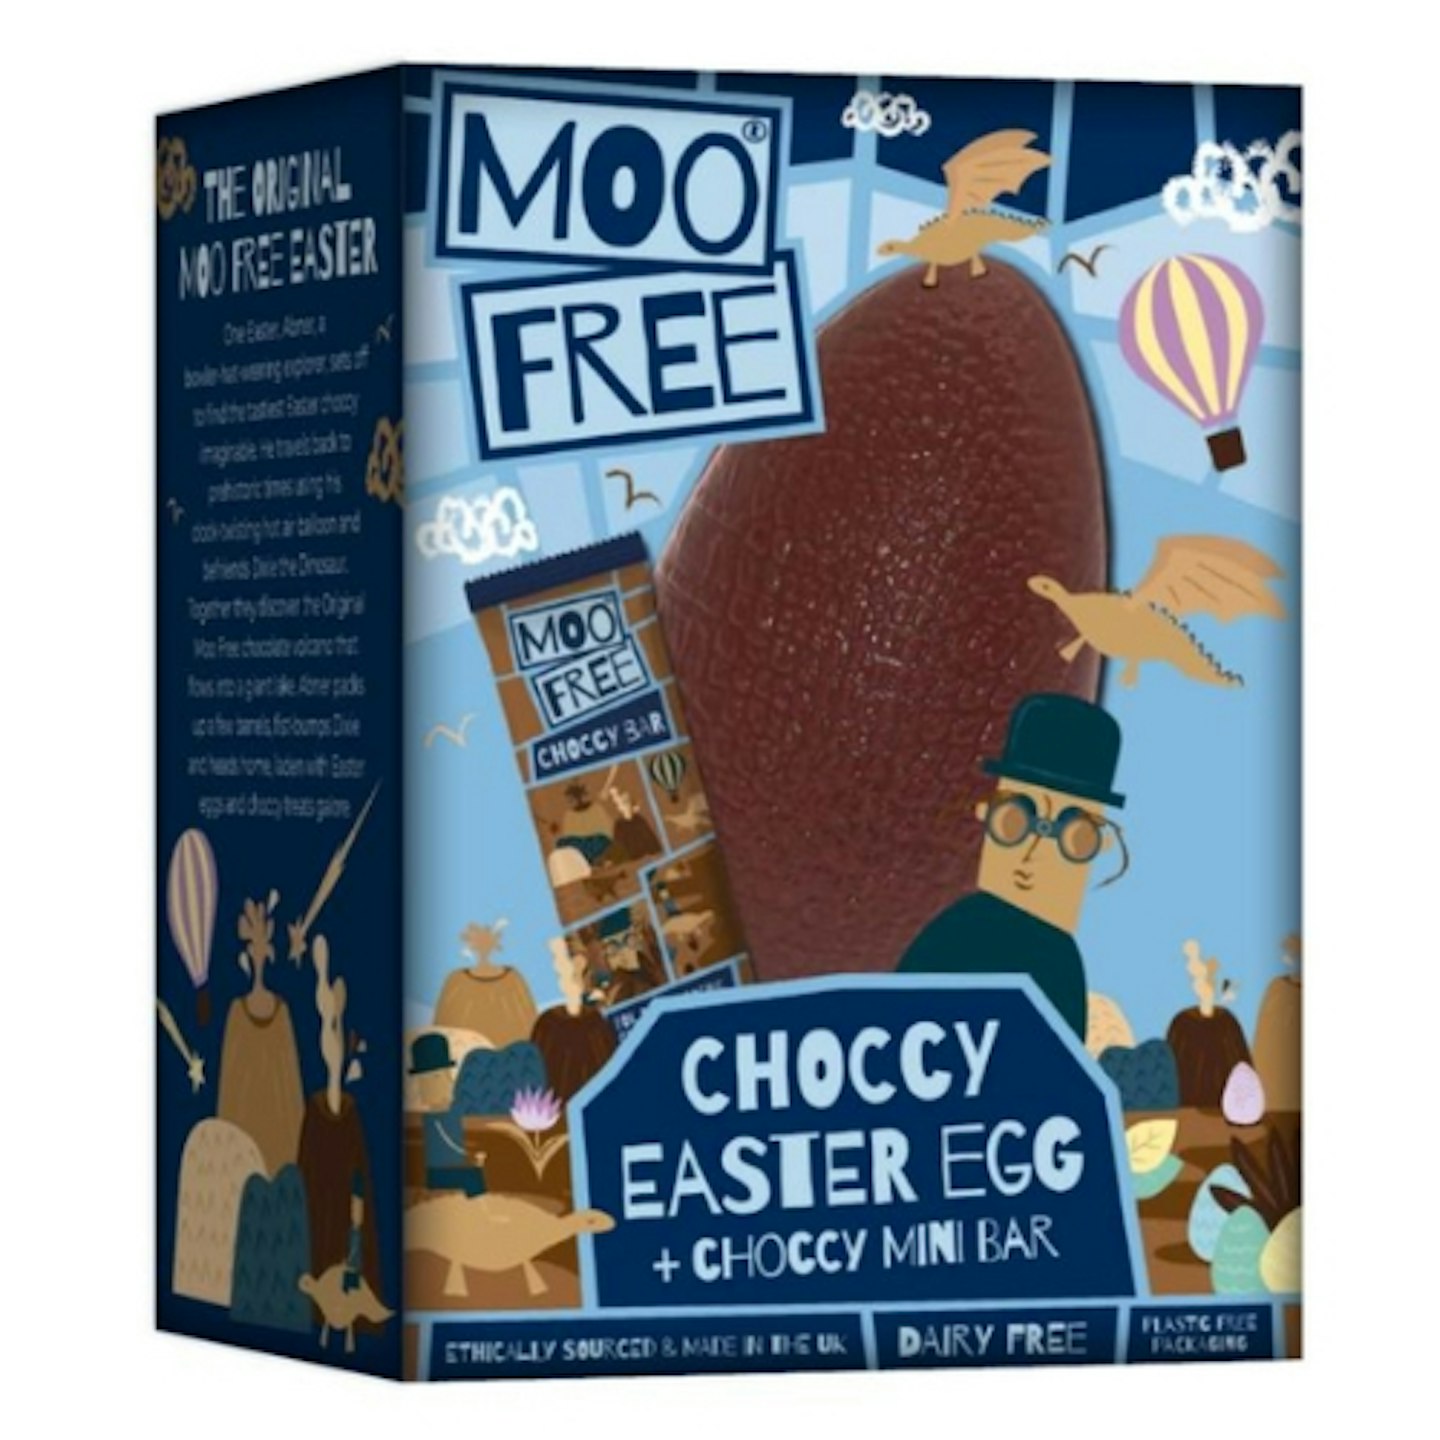 Moo Free Original Choccy Easter Egg with Choccy Mini Bar